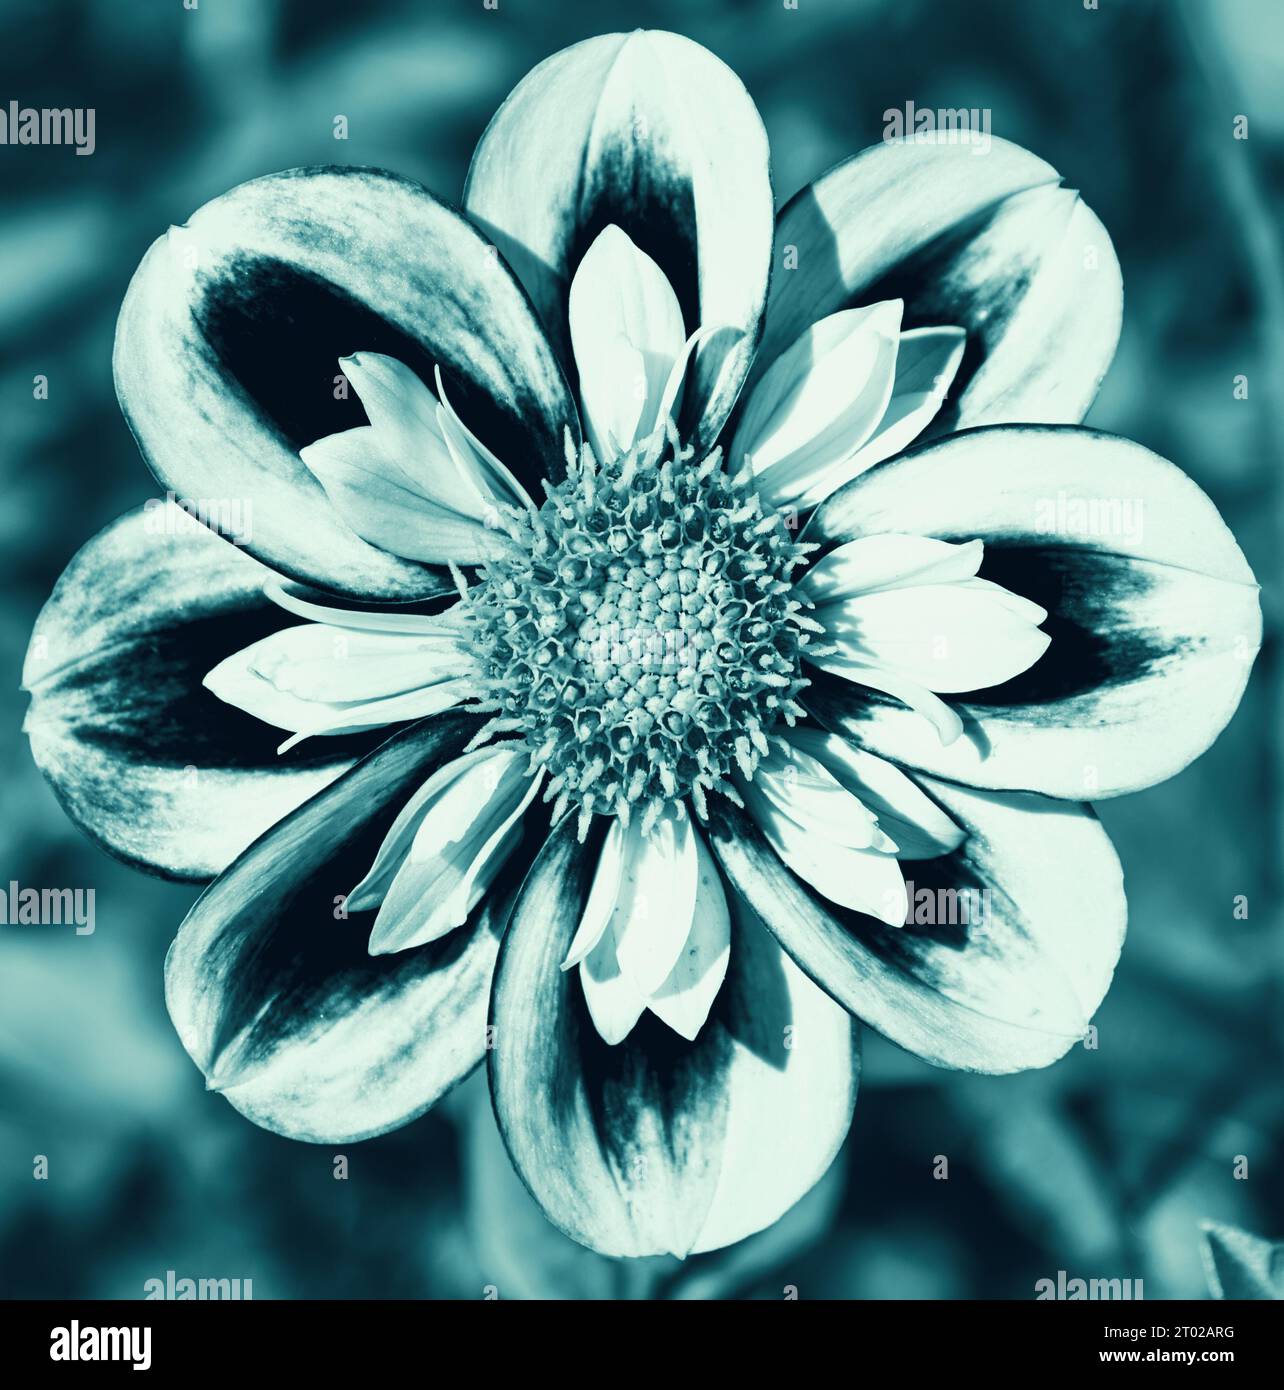 Dahlia flower  symmetric perfection. Closeup. Abstract floral art background. Blue moody retro toned photo. Stock Photo